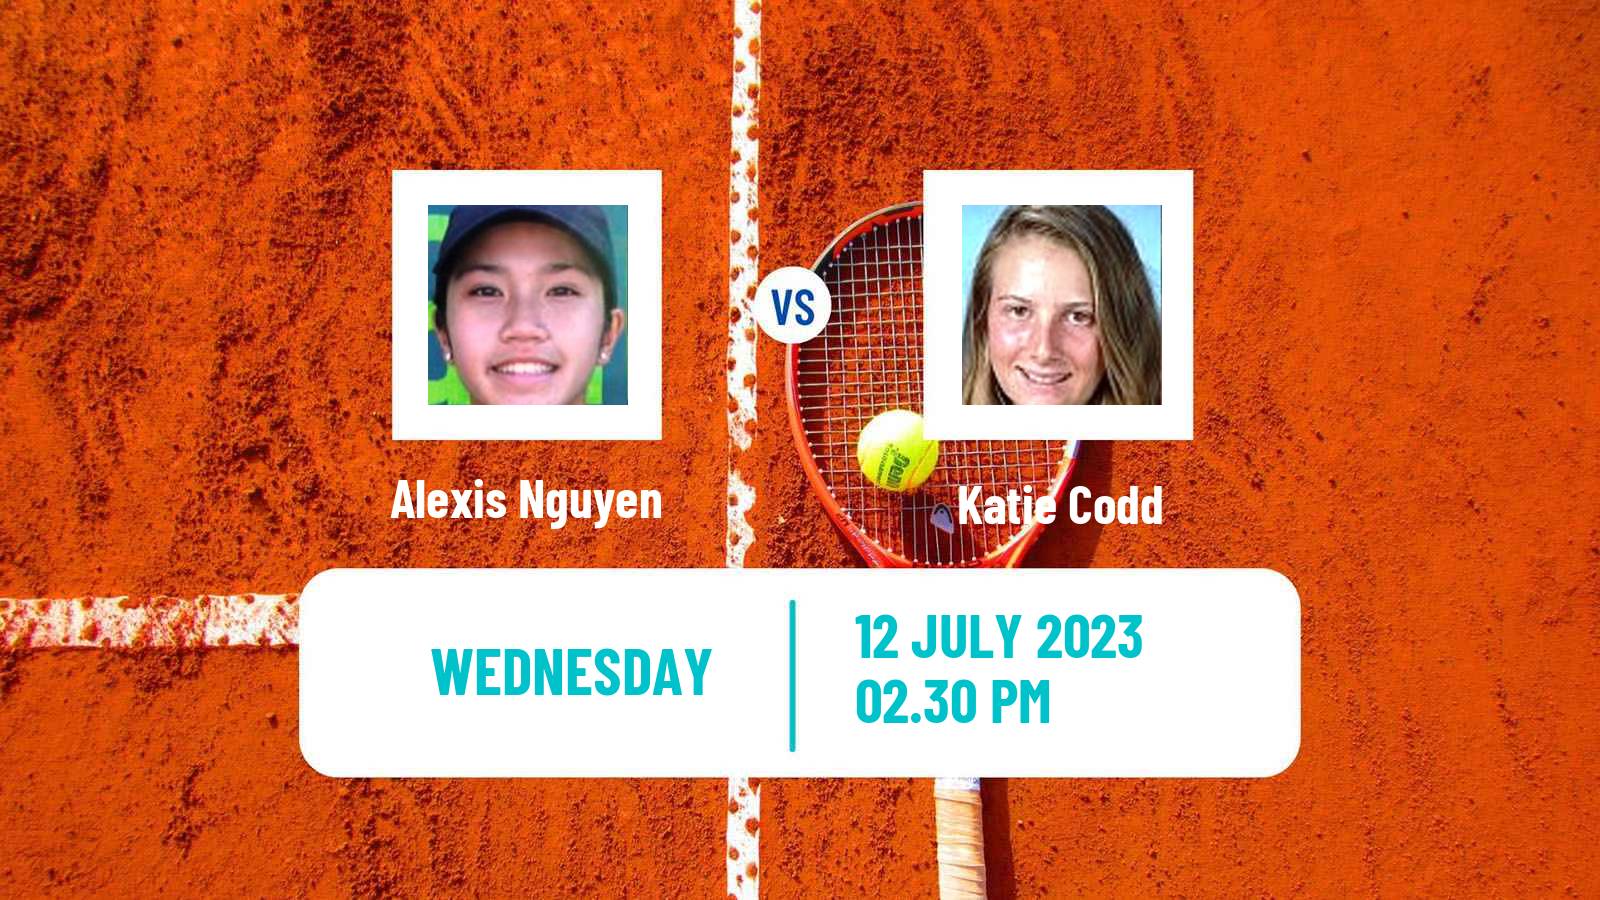 Tennis ITF W15 Lakewood Ca 2 Women Alexis Nguyen - Katie Codd